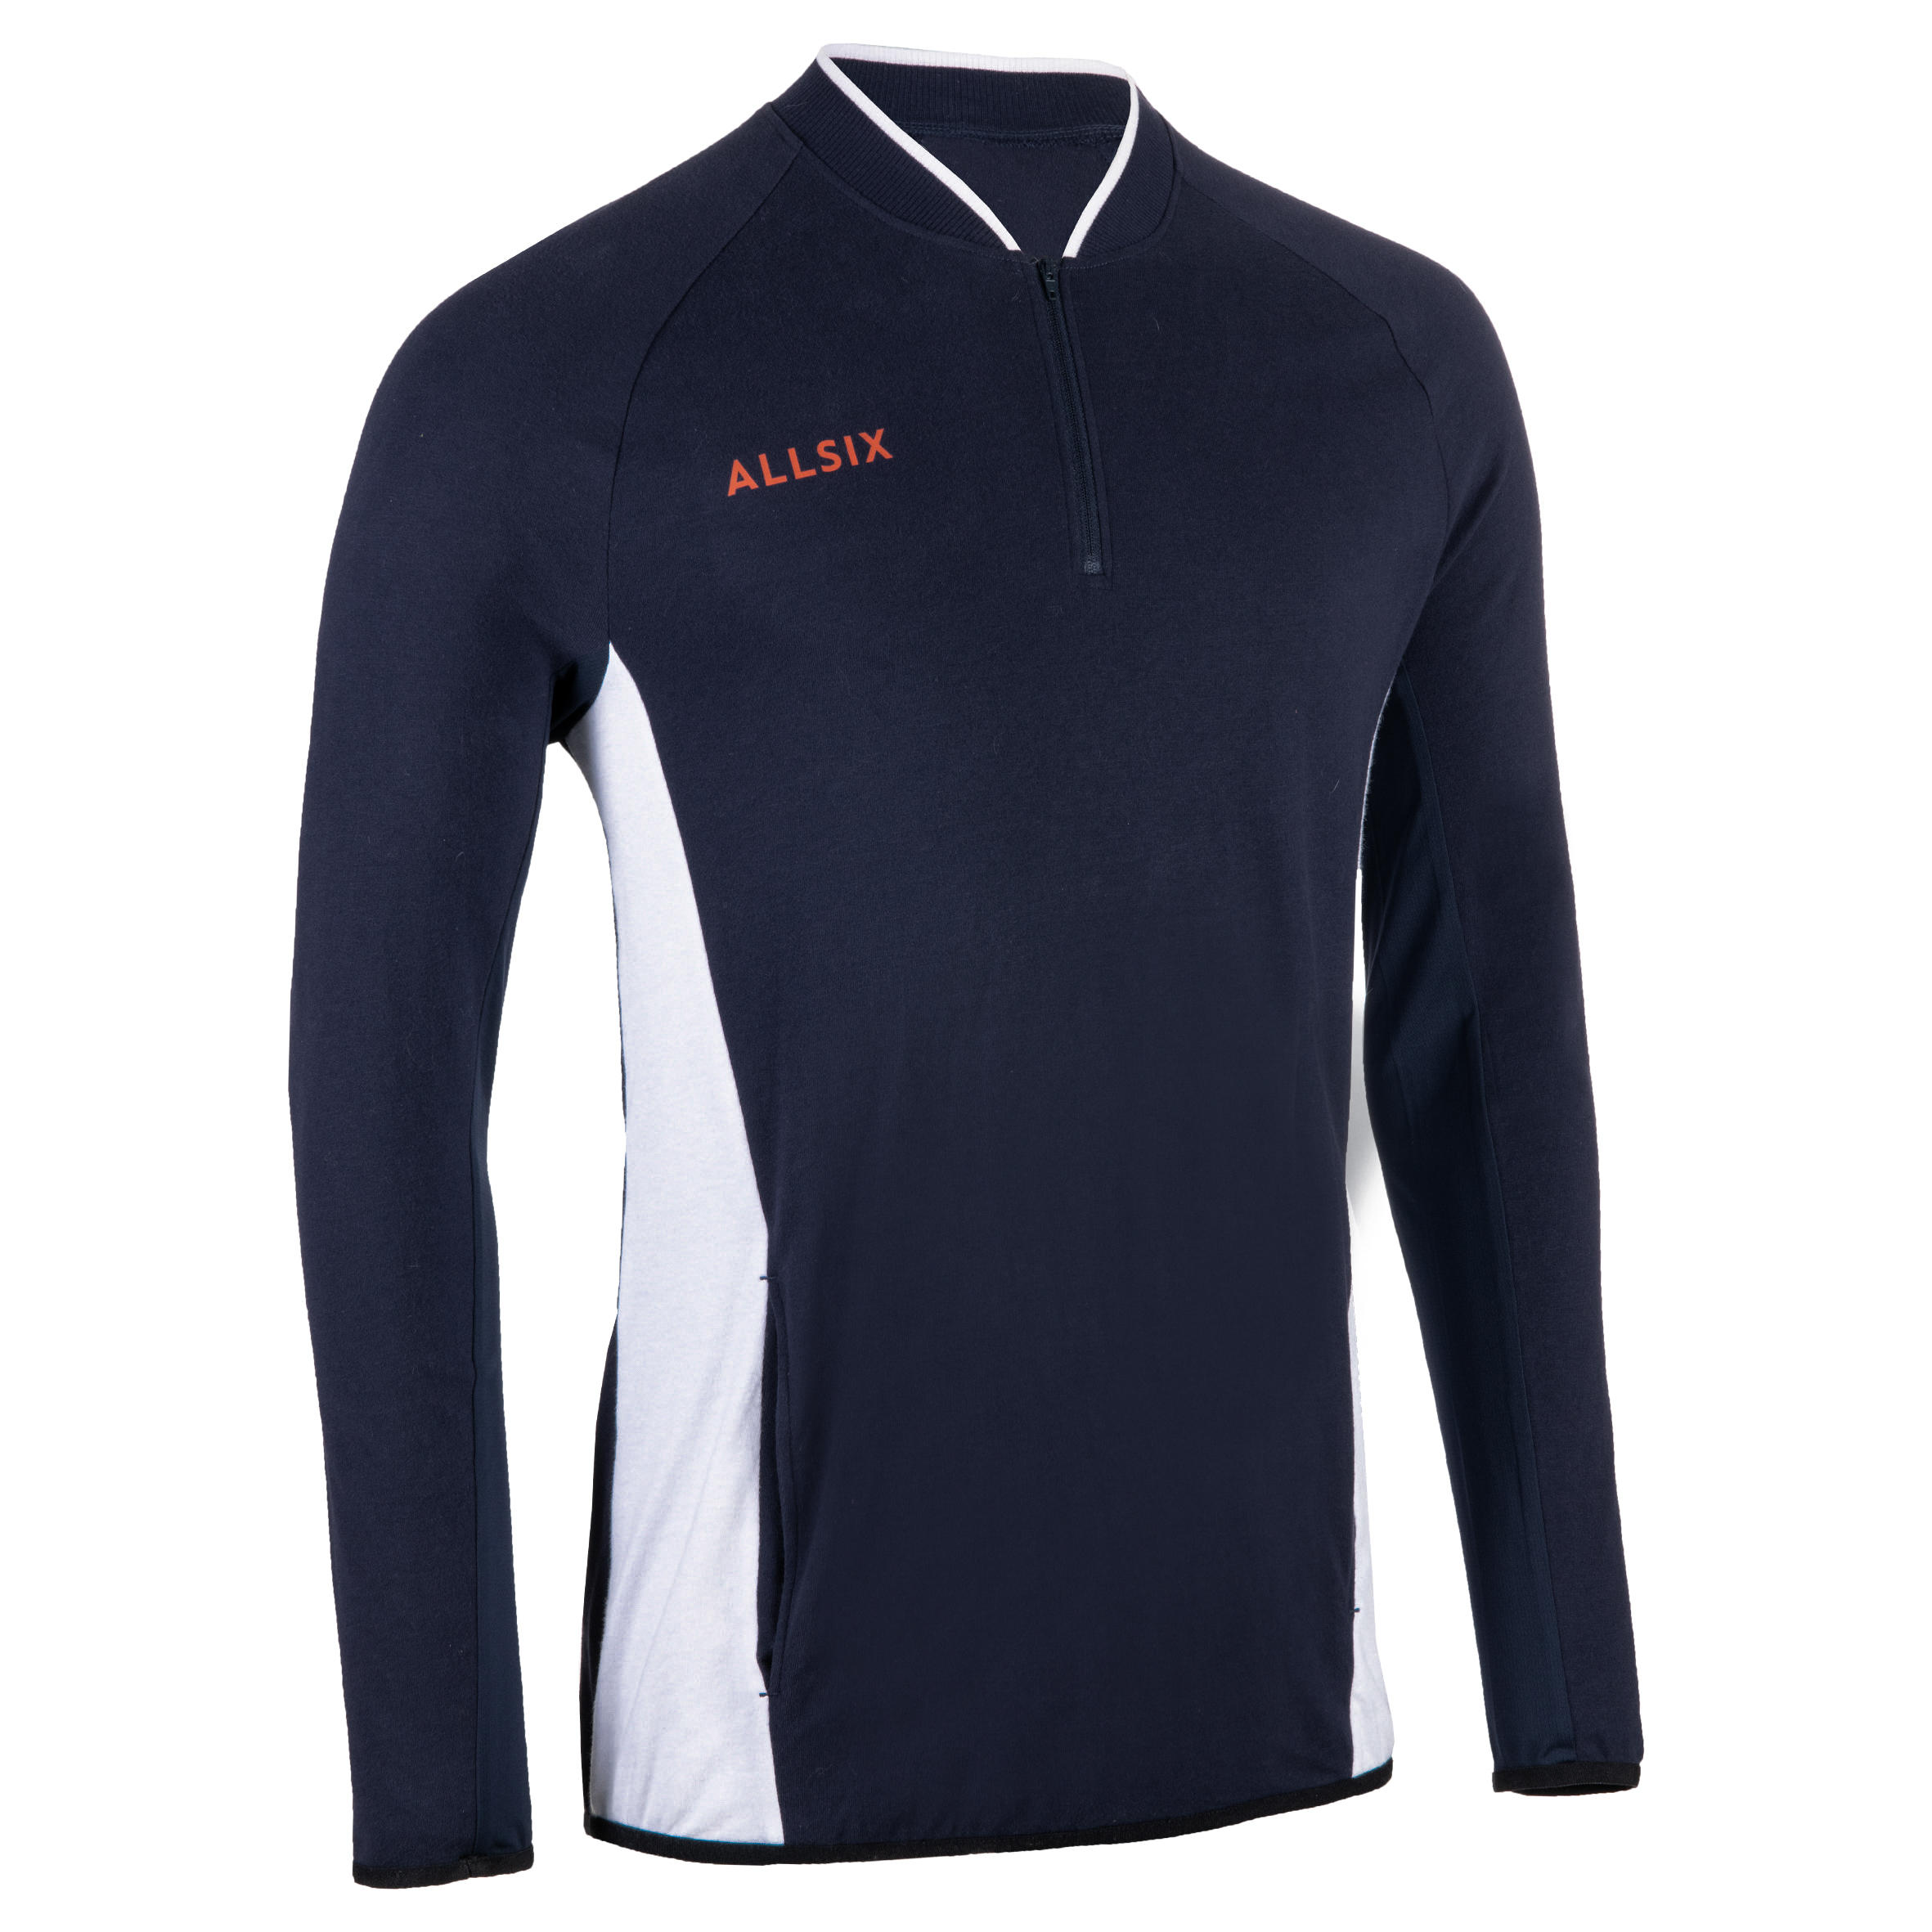 ALLSIX Volleyball Jacket - Navy/White